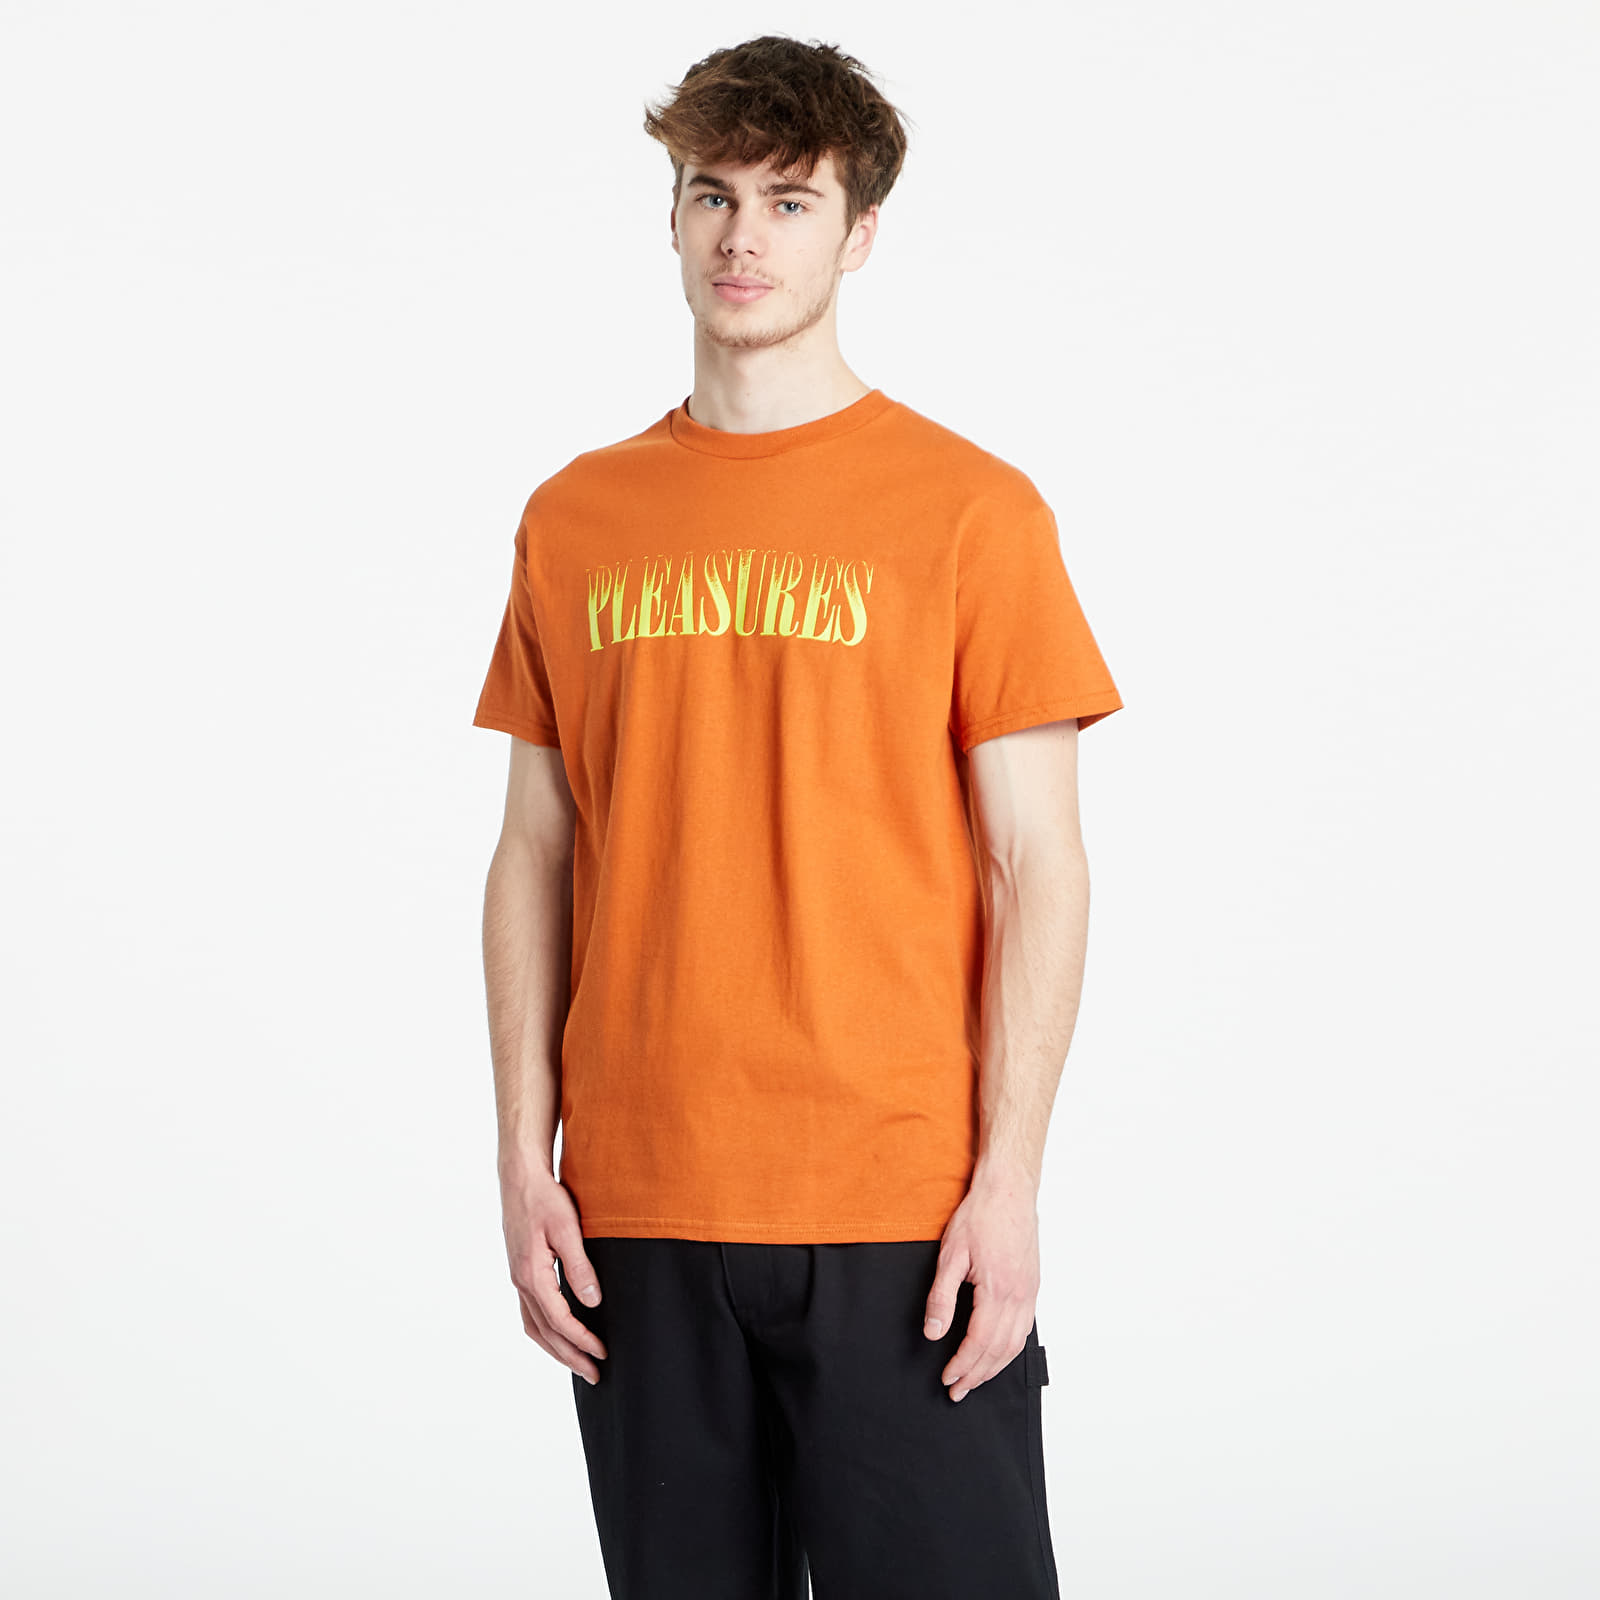 PLEASURES - crumble t-shirt texas orange